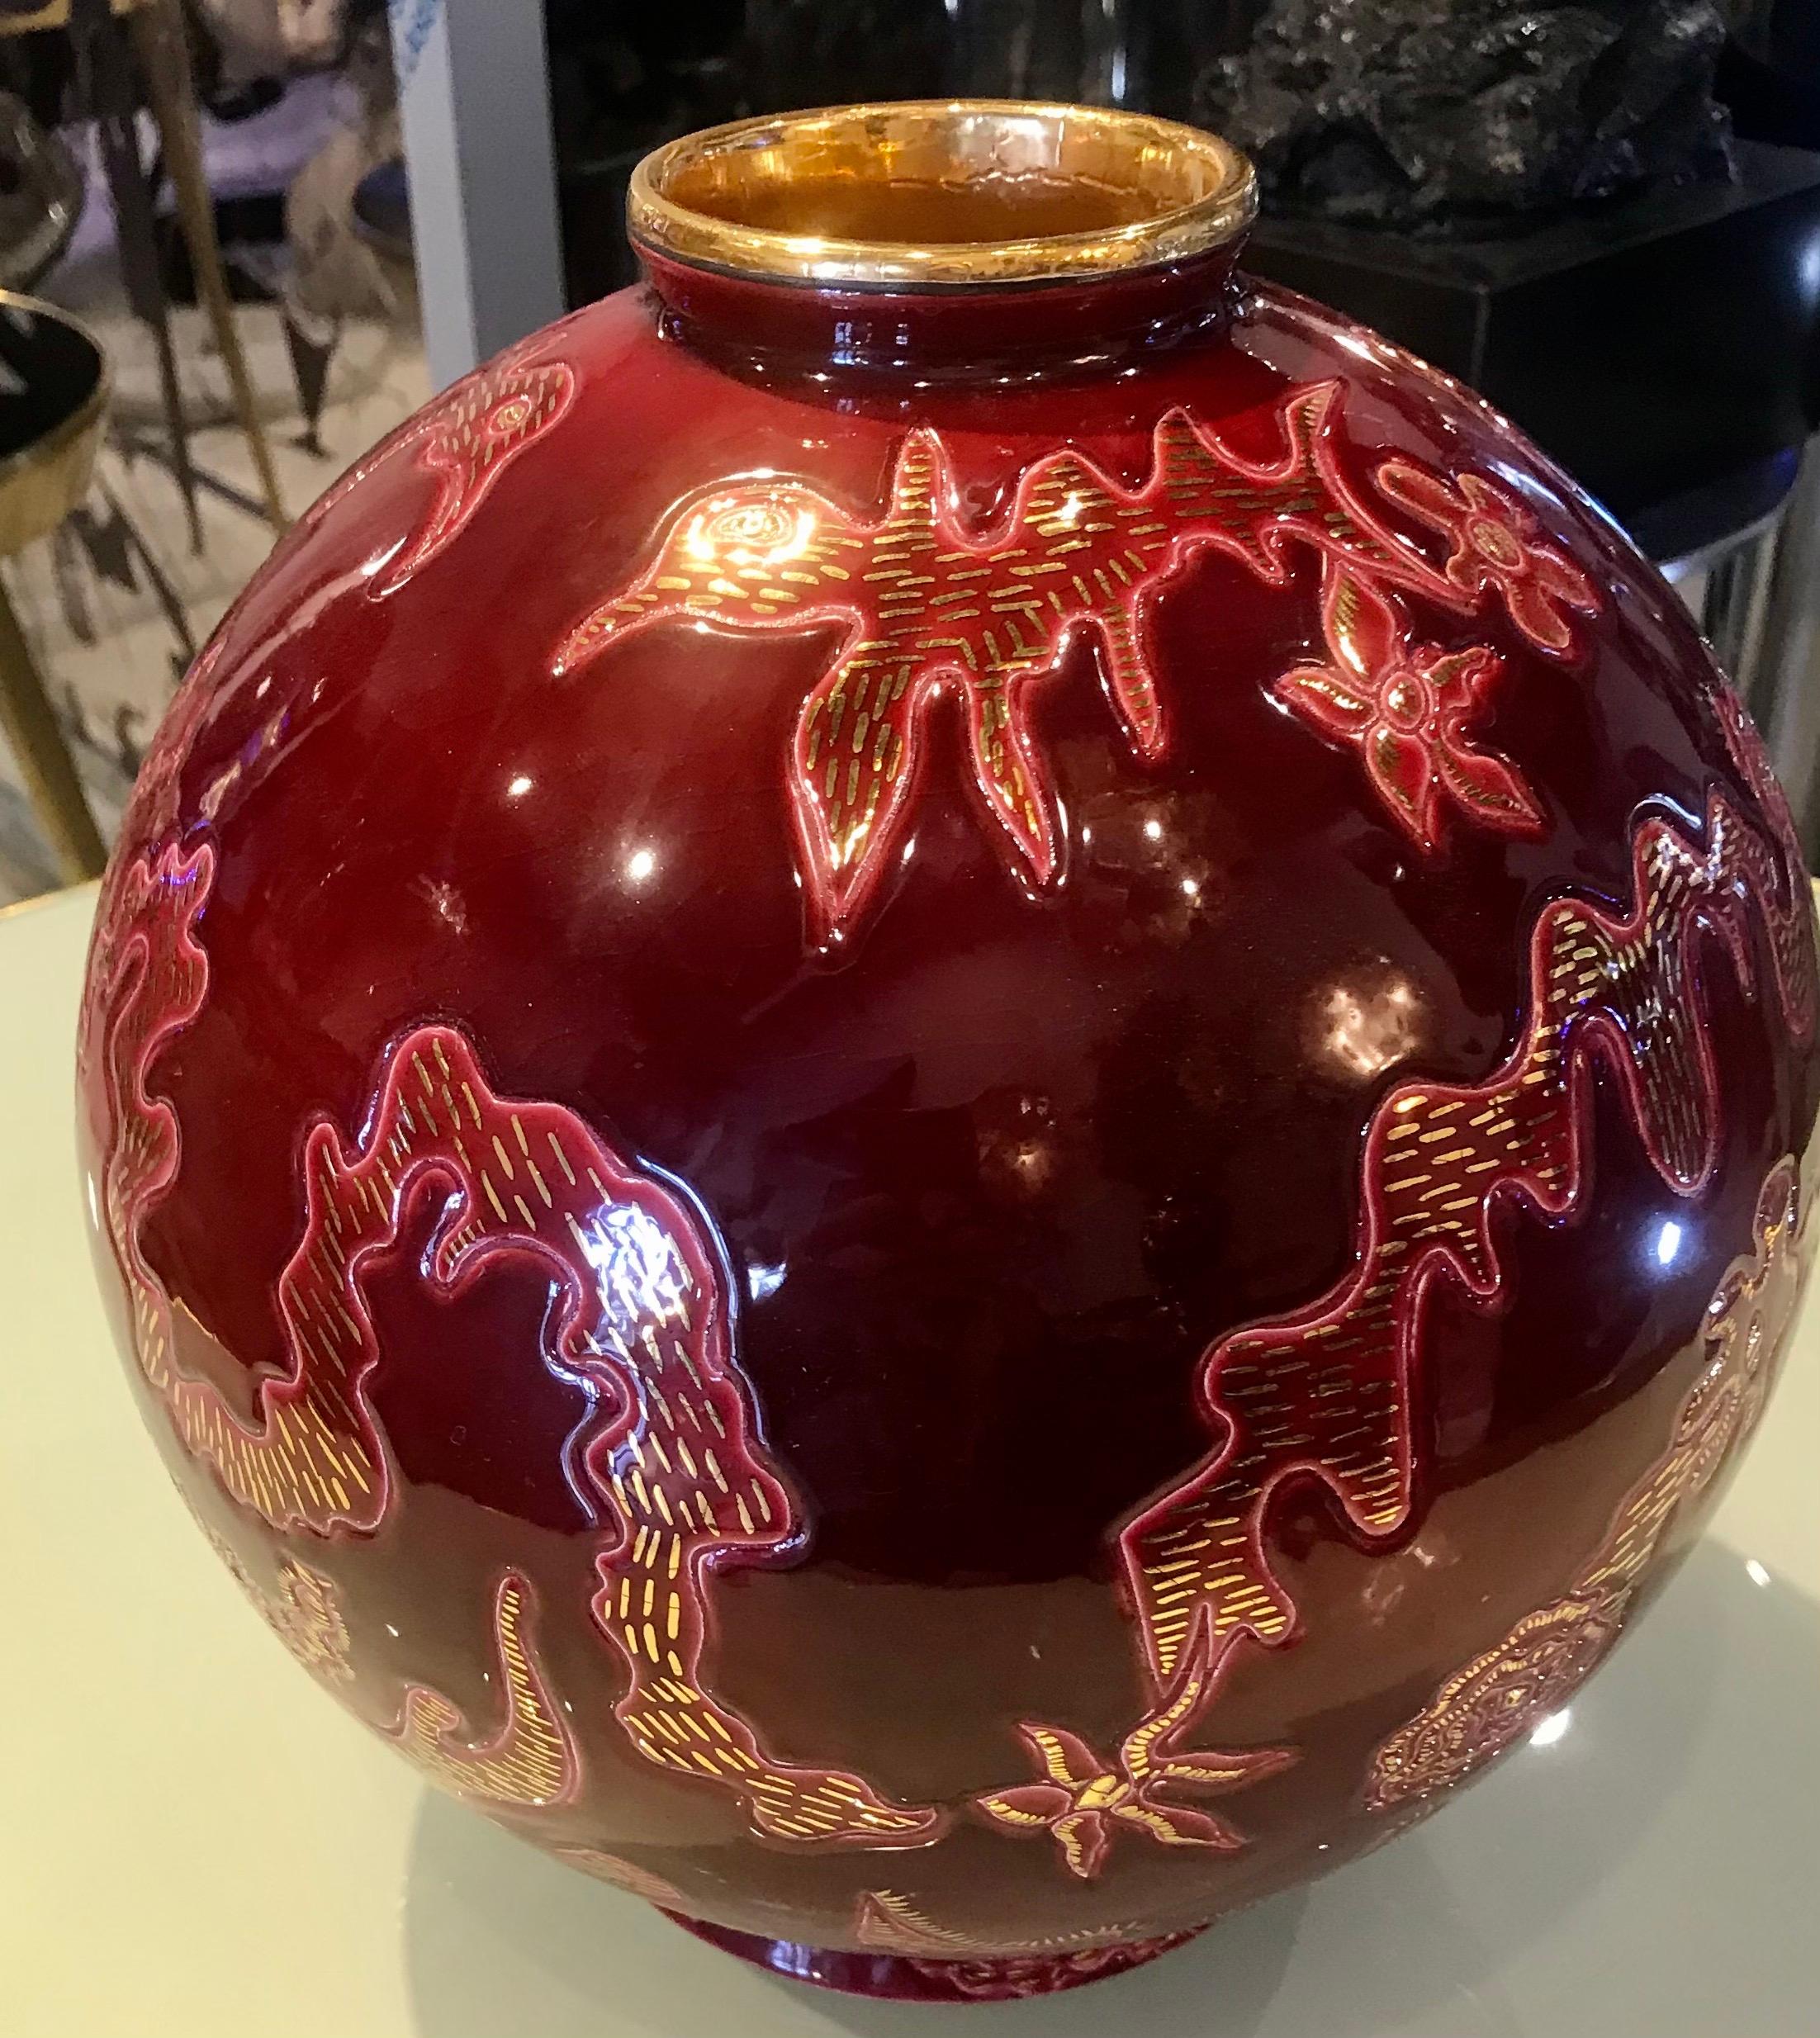 Modern Rare Emaux de Longwy Ceramic Boule Vase by Garouste and Bonetti Limited 1 of 5

